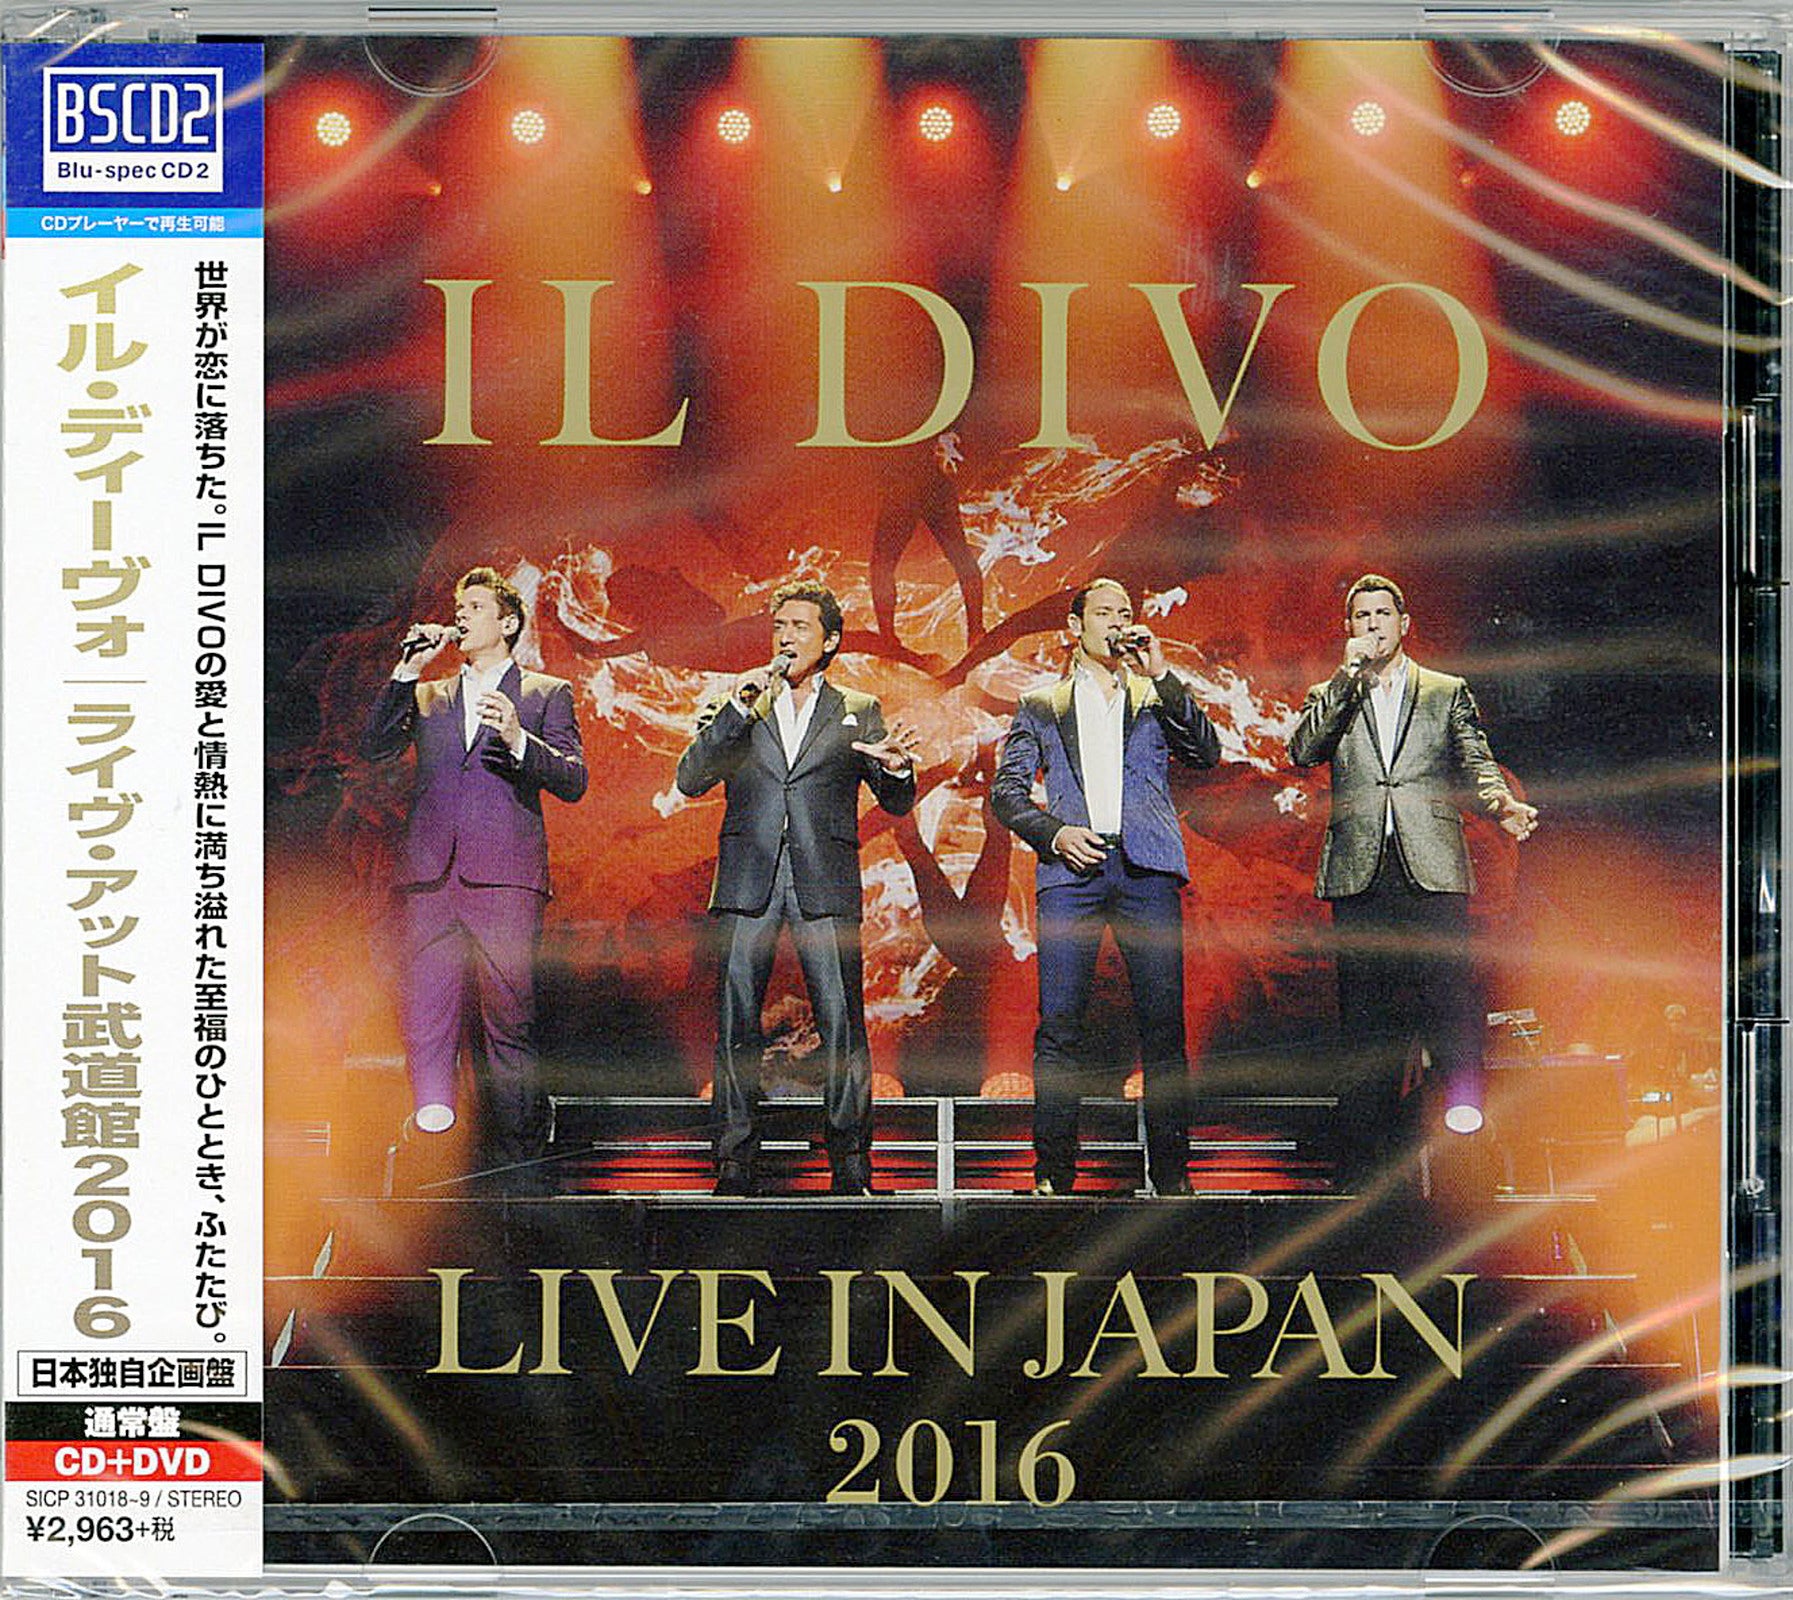 Il Divo - Live In Japan 2016 - Blu-spec CD2+DVD – CDs Vinyl Japan